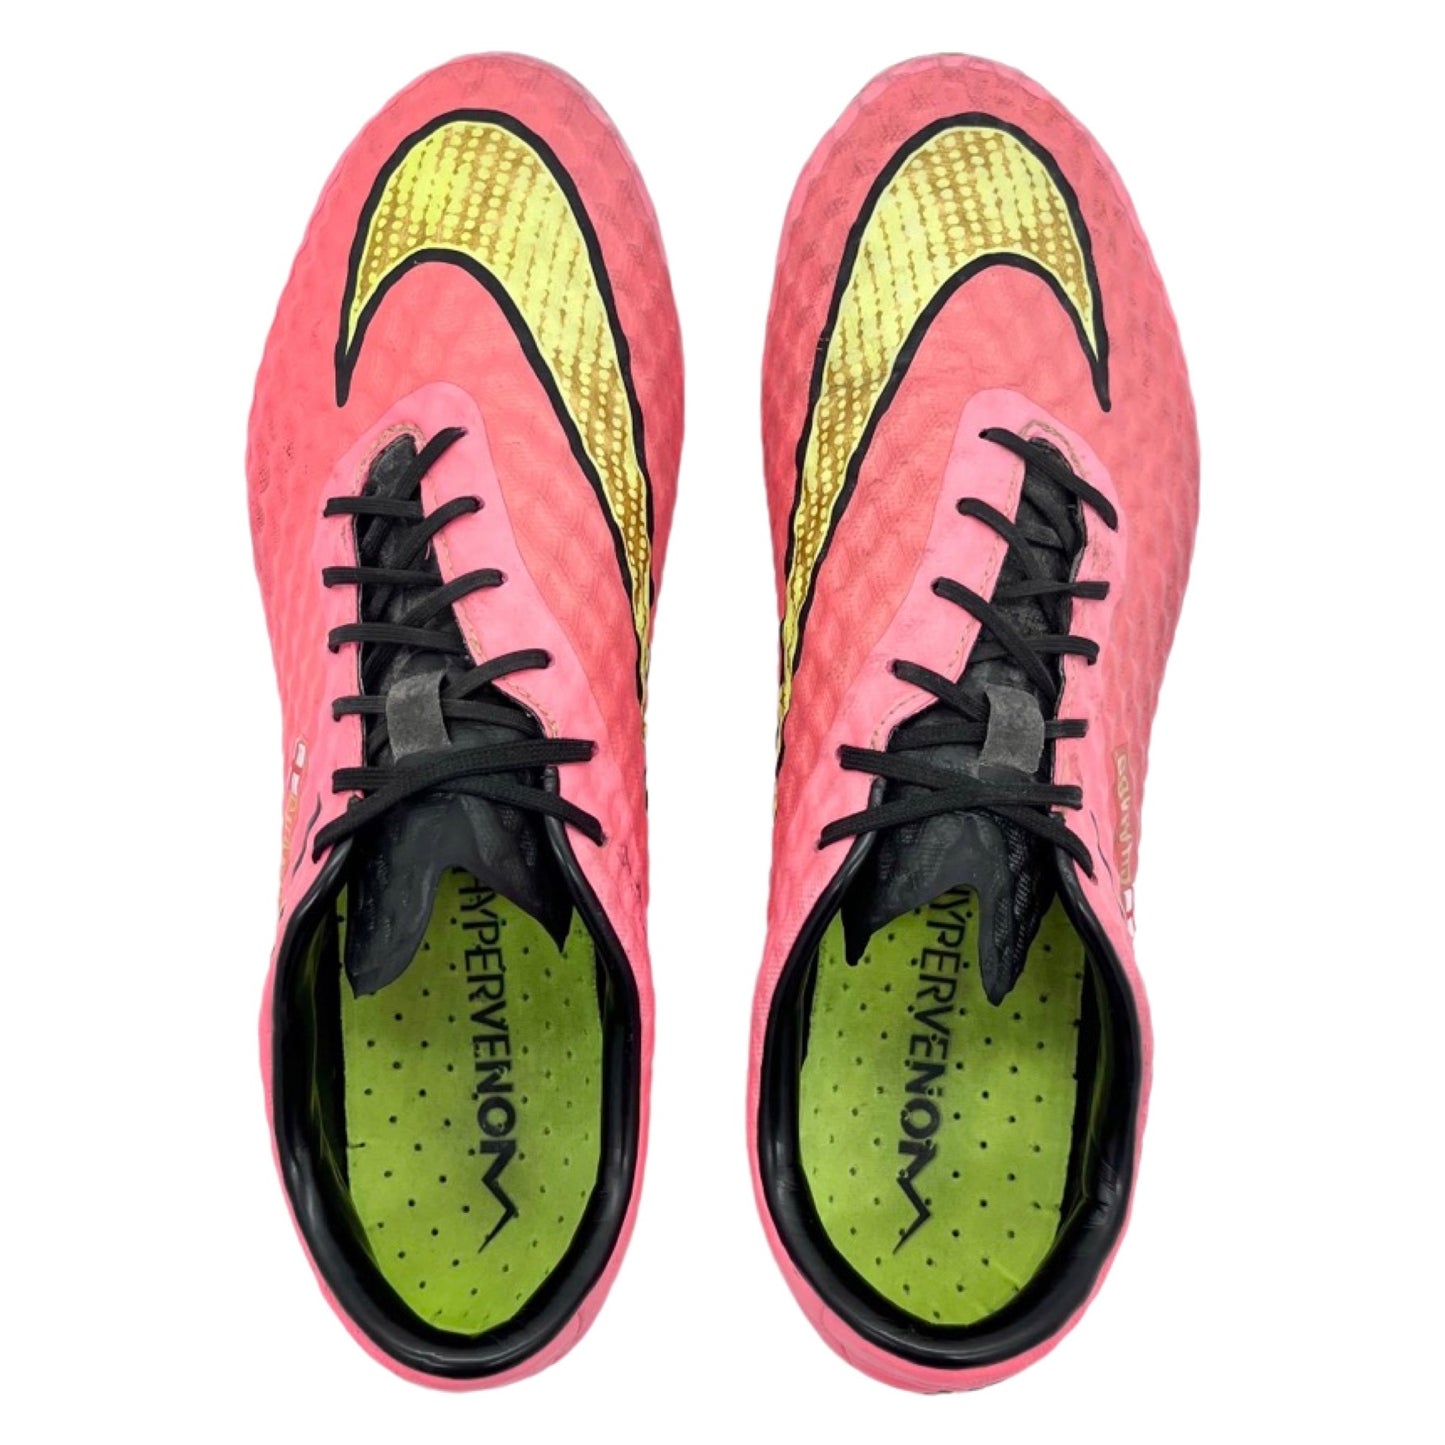 Nike Hypervenom Phantom World Cup Boots - FIFA 14 at ModdingWay